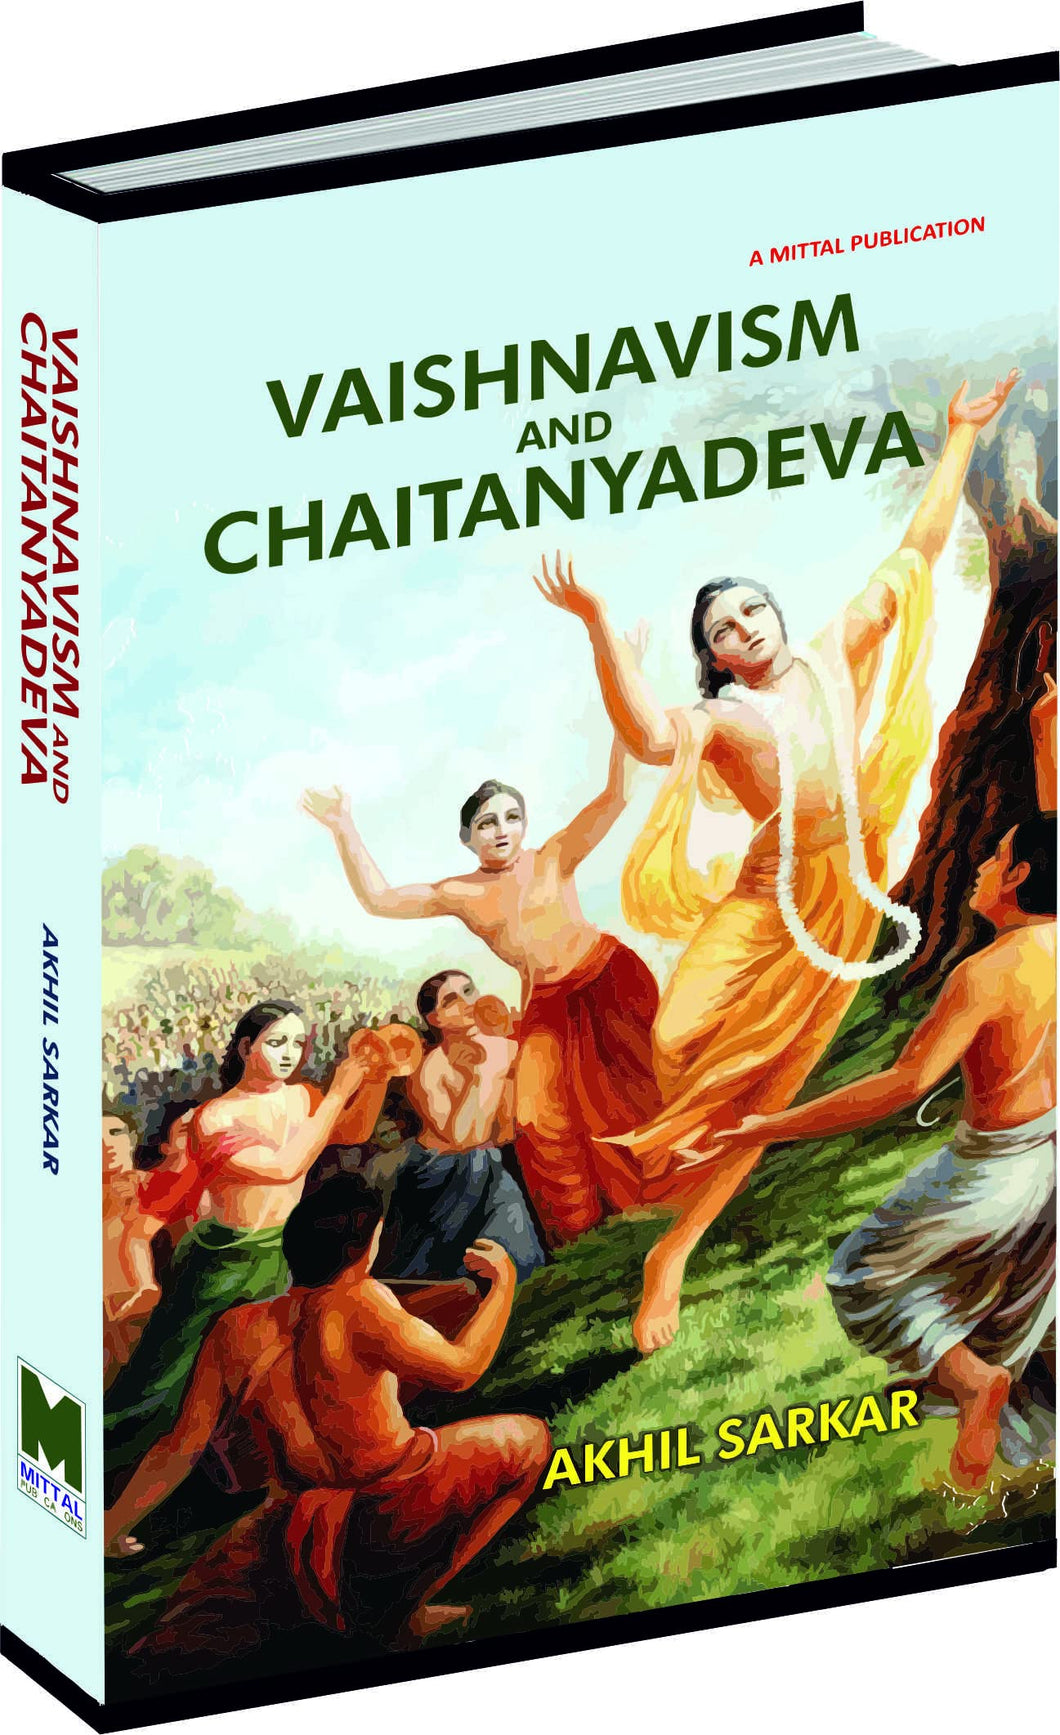 Vaishnavism and Chaitanyadeva: Impact on the Changing Society by Akhil Sarkar